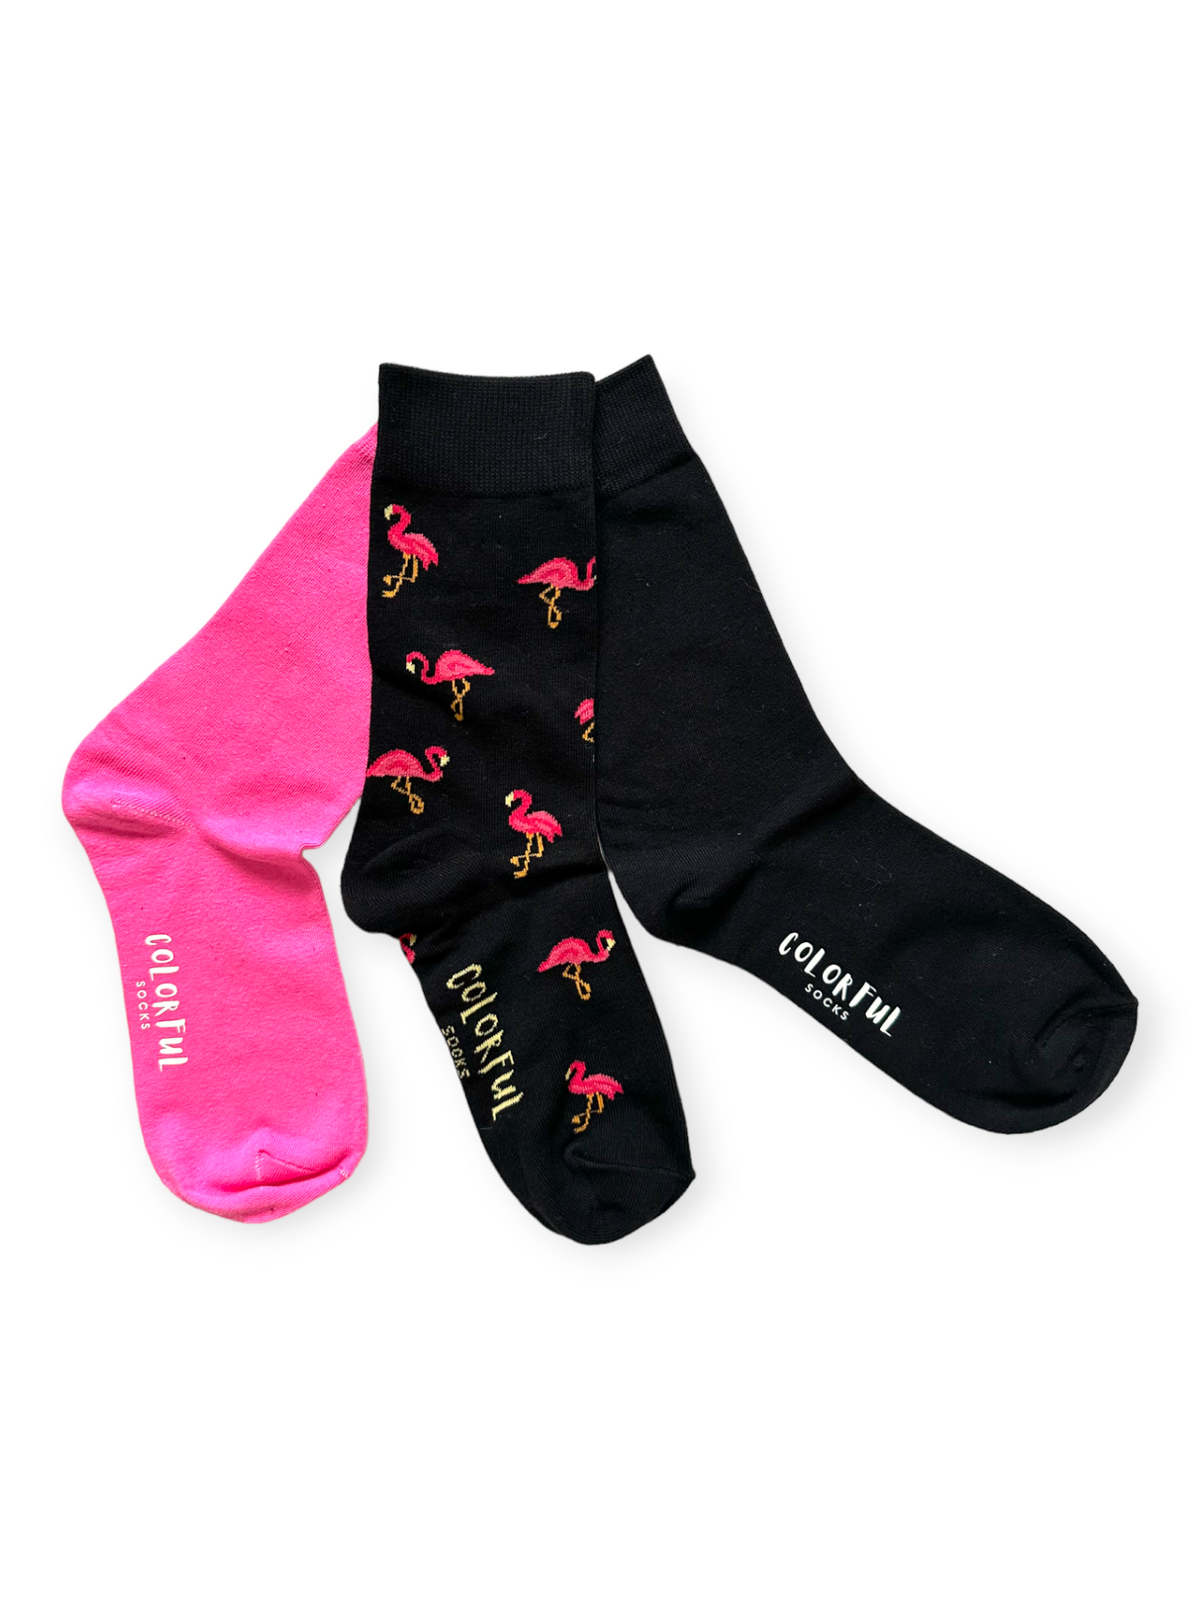 Best Colorful Socks - Flamingo Socks